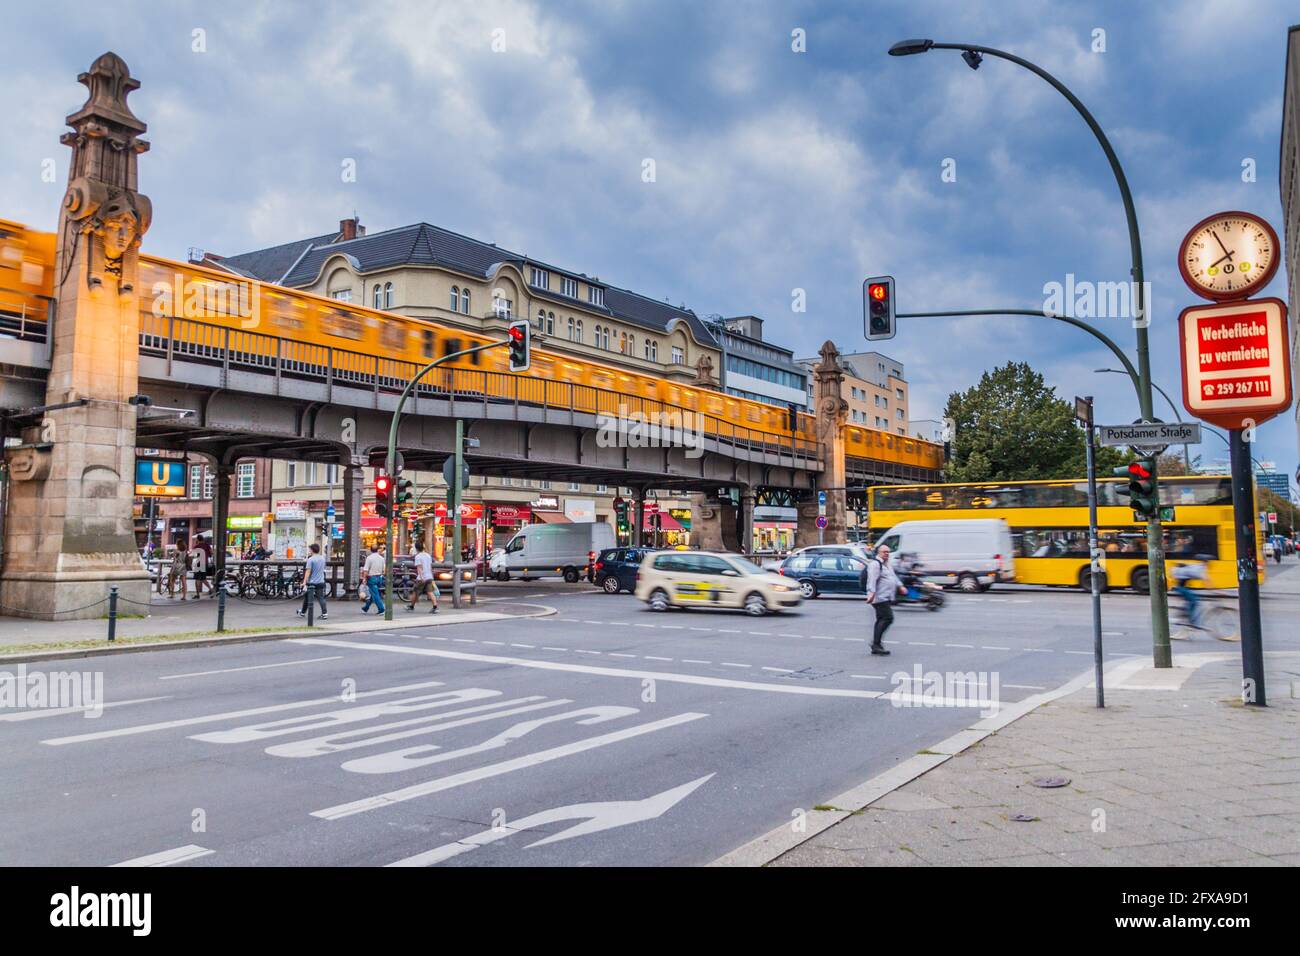 BERLINO, GERMANIA - 18 AGOSTO 2017: Percorsi sopraelevati della metropolitana U-Bahn di Berlino in via Bulowstrasse. Foto Stock